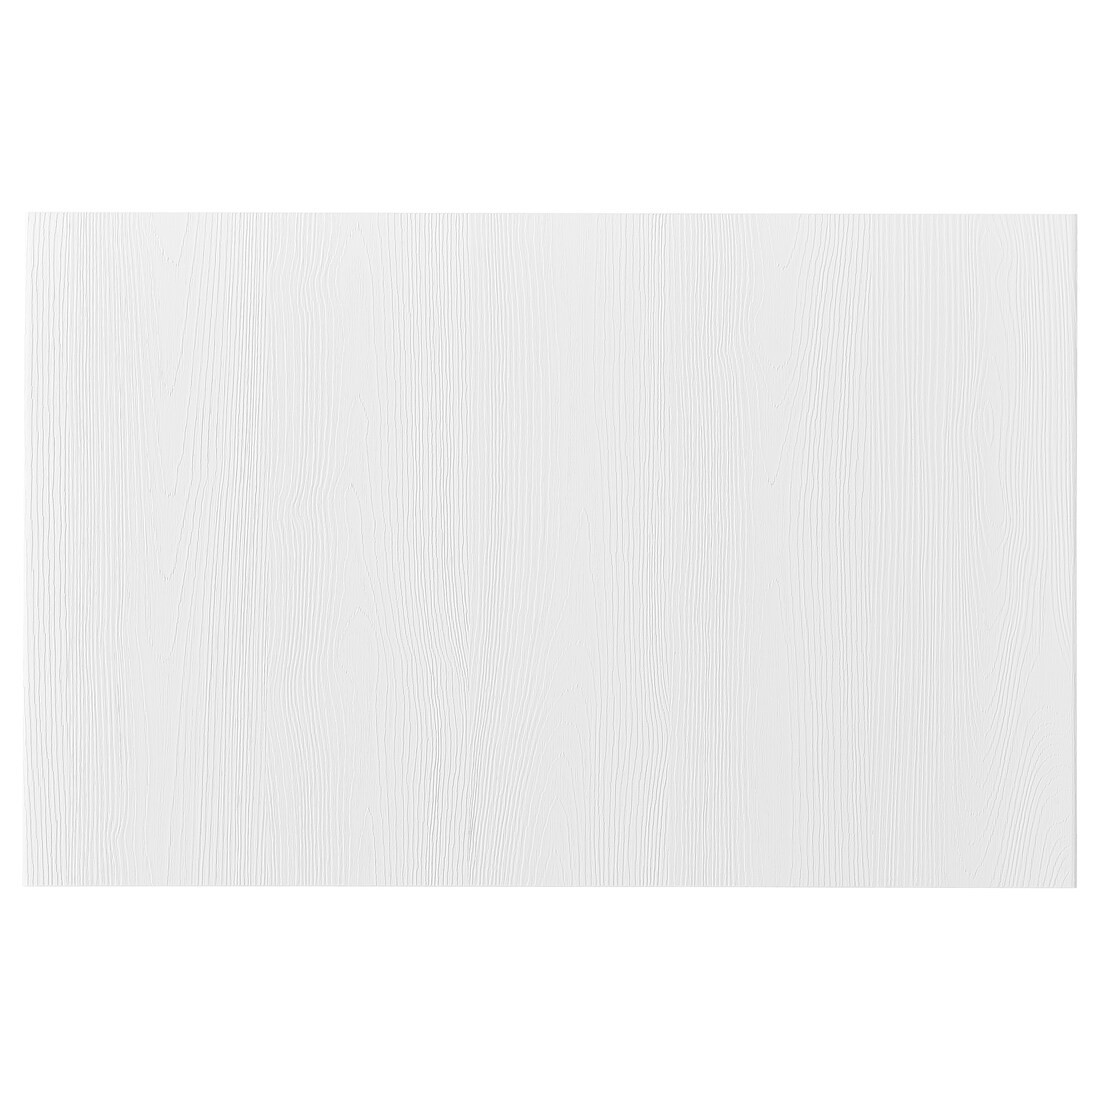 IKEA TIMMERVIKEN ТИММЕРВИКЕН Дверь / фронтальная панель ящика, белый, 60x38 см 50488164 504.881.64